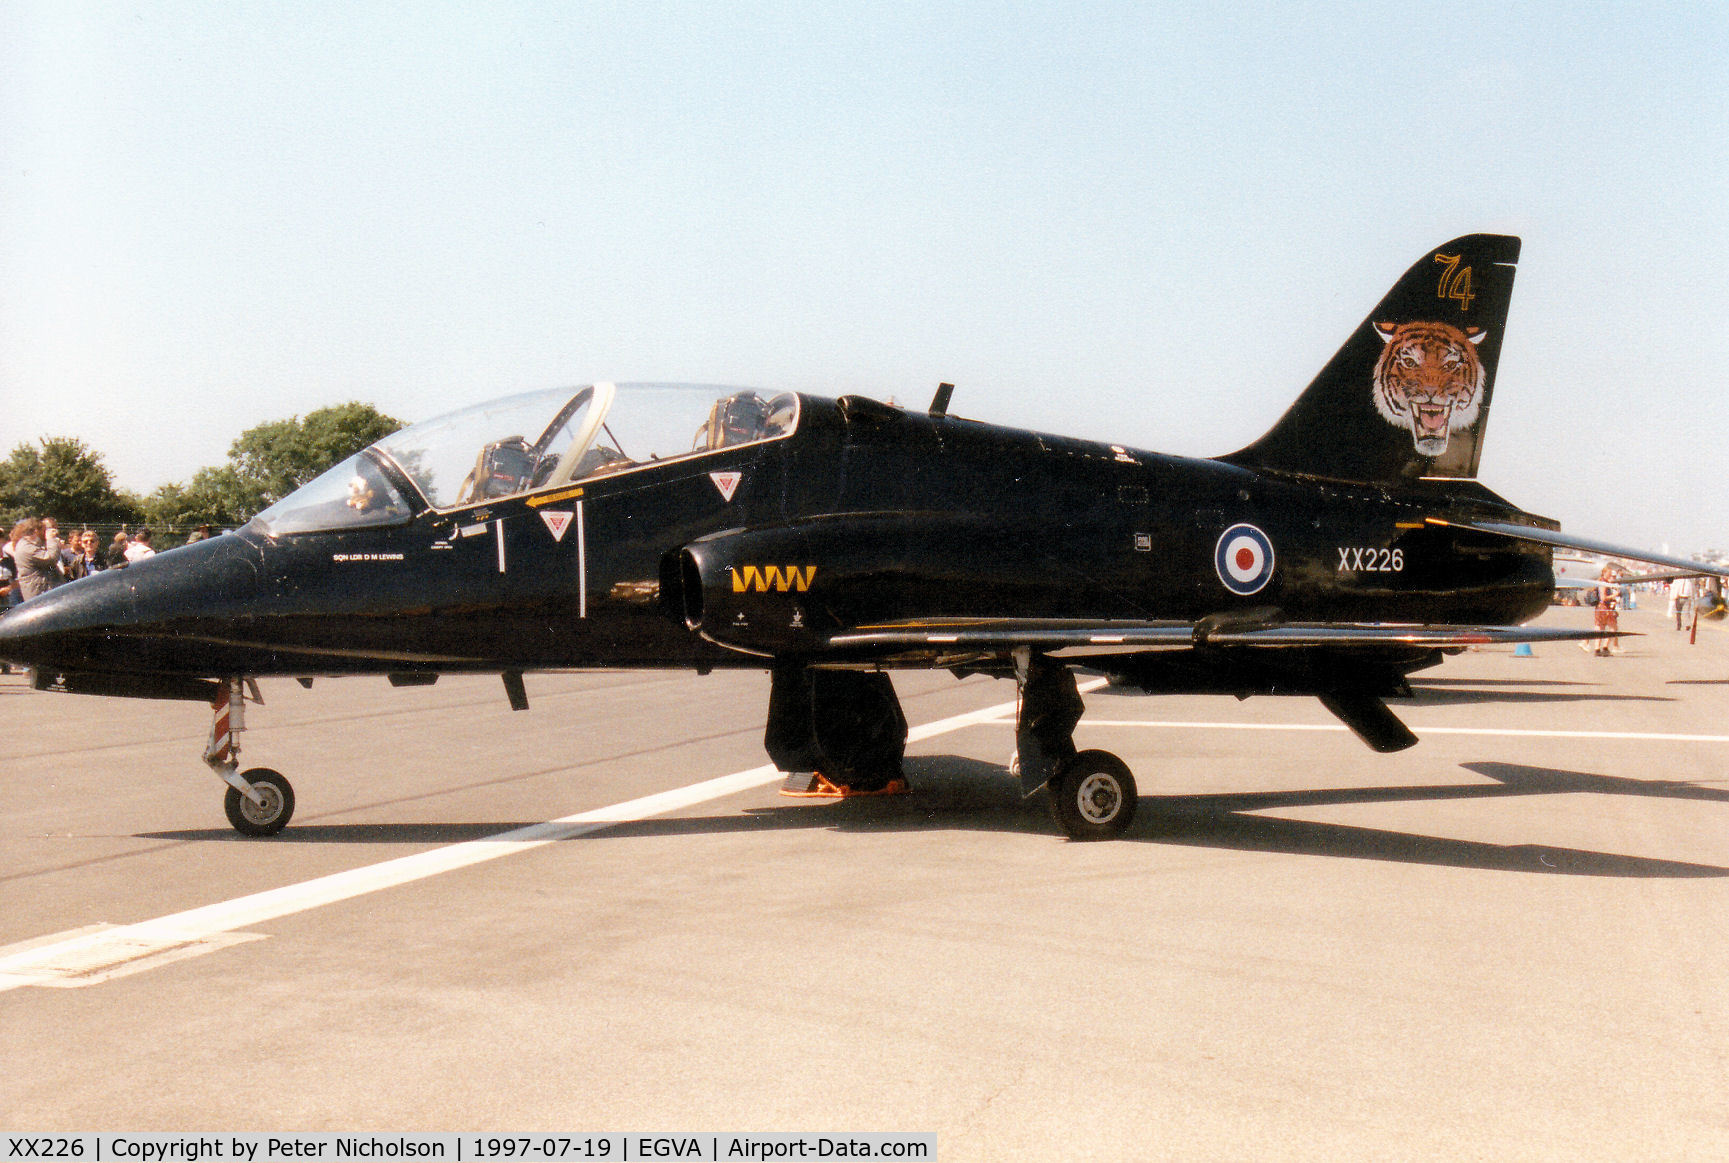 XX226, 1978 Hawker Siddeley Hawk T.1 C/N 062/312062, Hawk T.1, callsign Tiger 2, of 74[Reserve] Squadron at RAF Valley on display at the 1997 Intnl Air Tattoo at RAF Fairford.